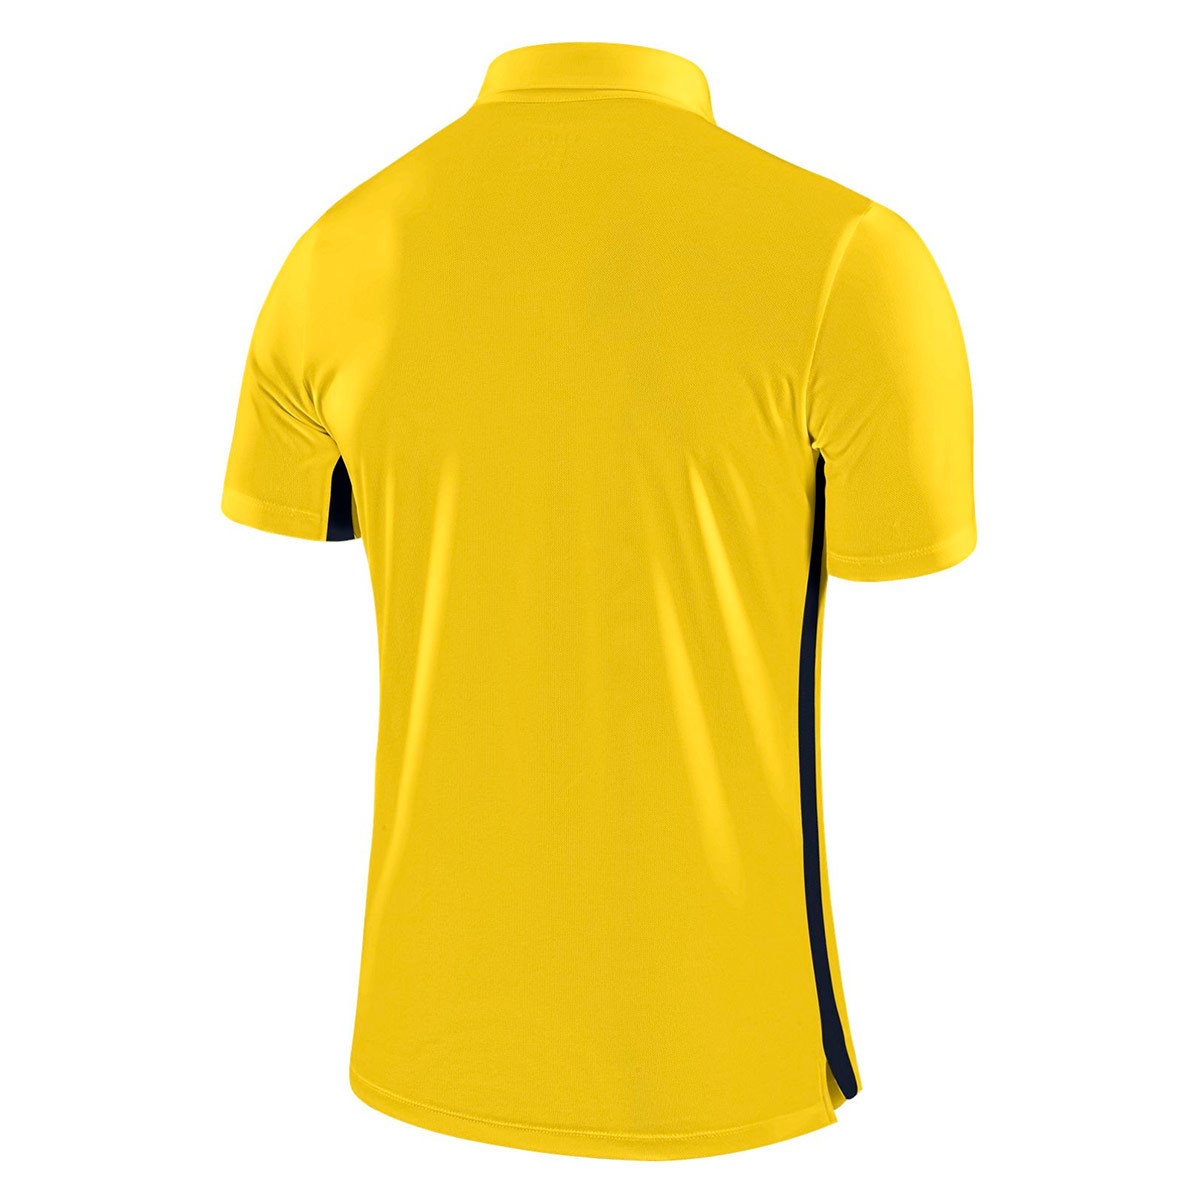 nike yellow and black shirt